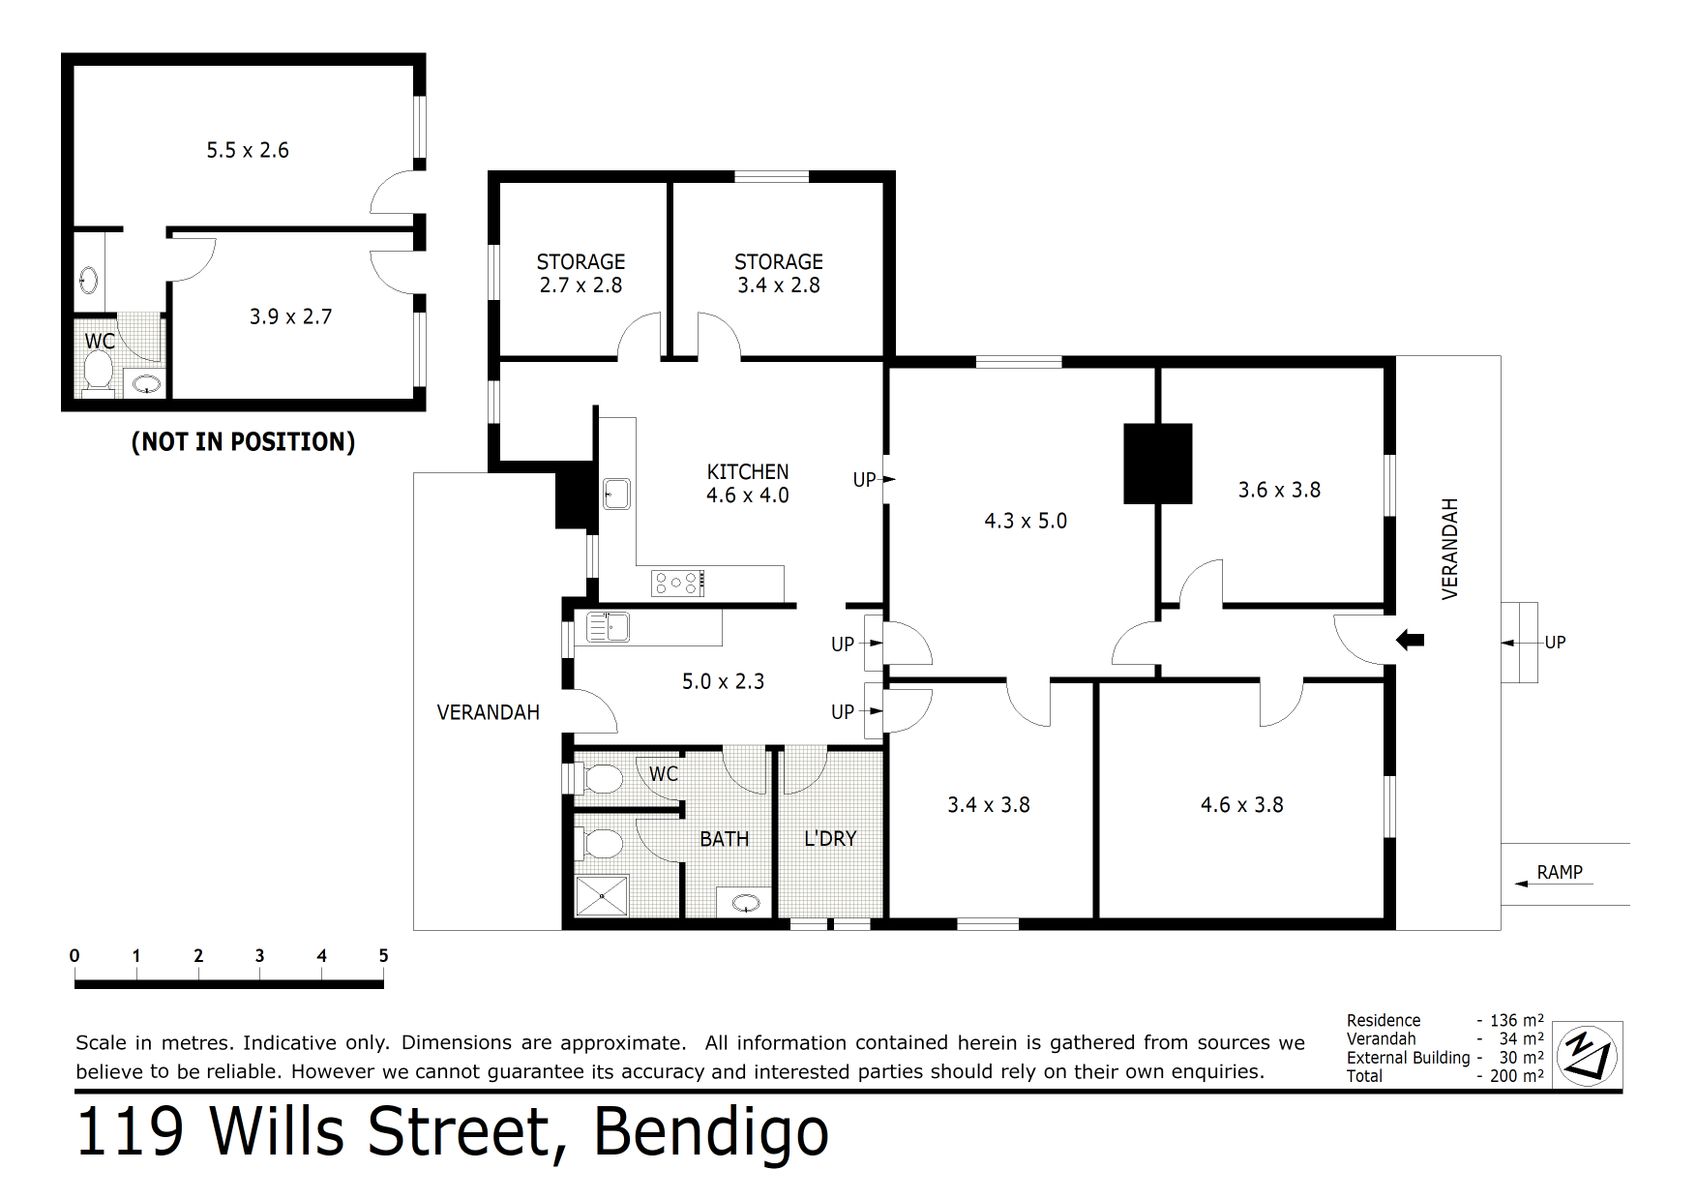 119 Wills Street Bendigo (10 JUN 2021) 136sqm